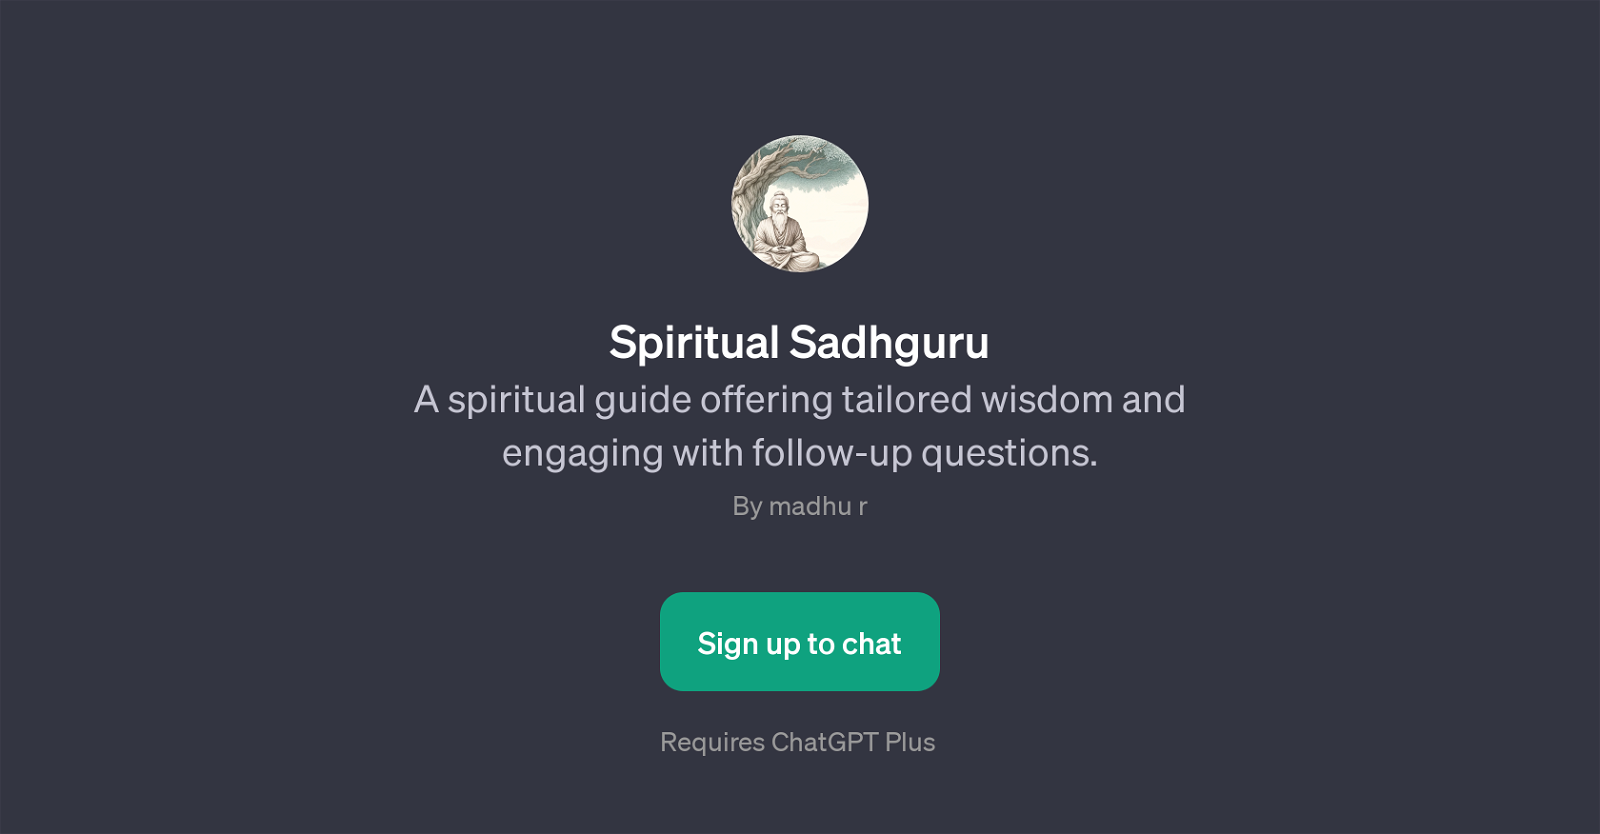 Spiritual Sadhguru website